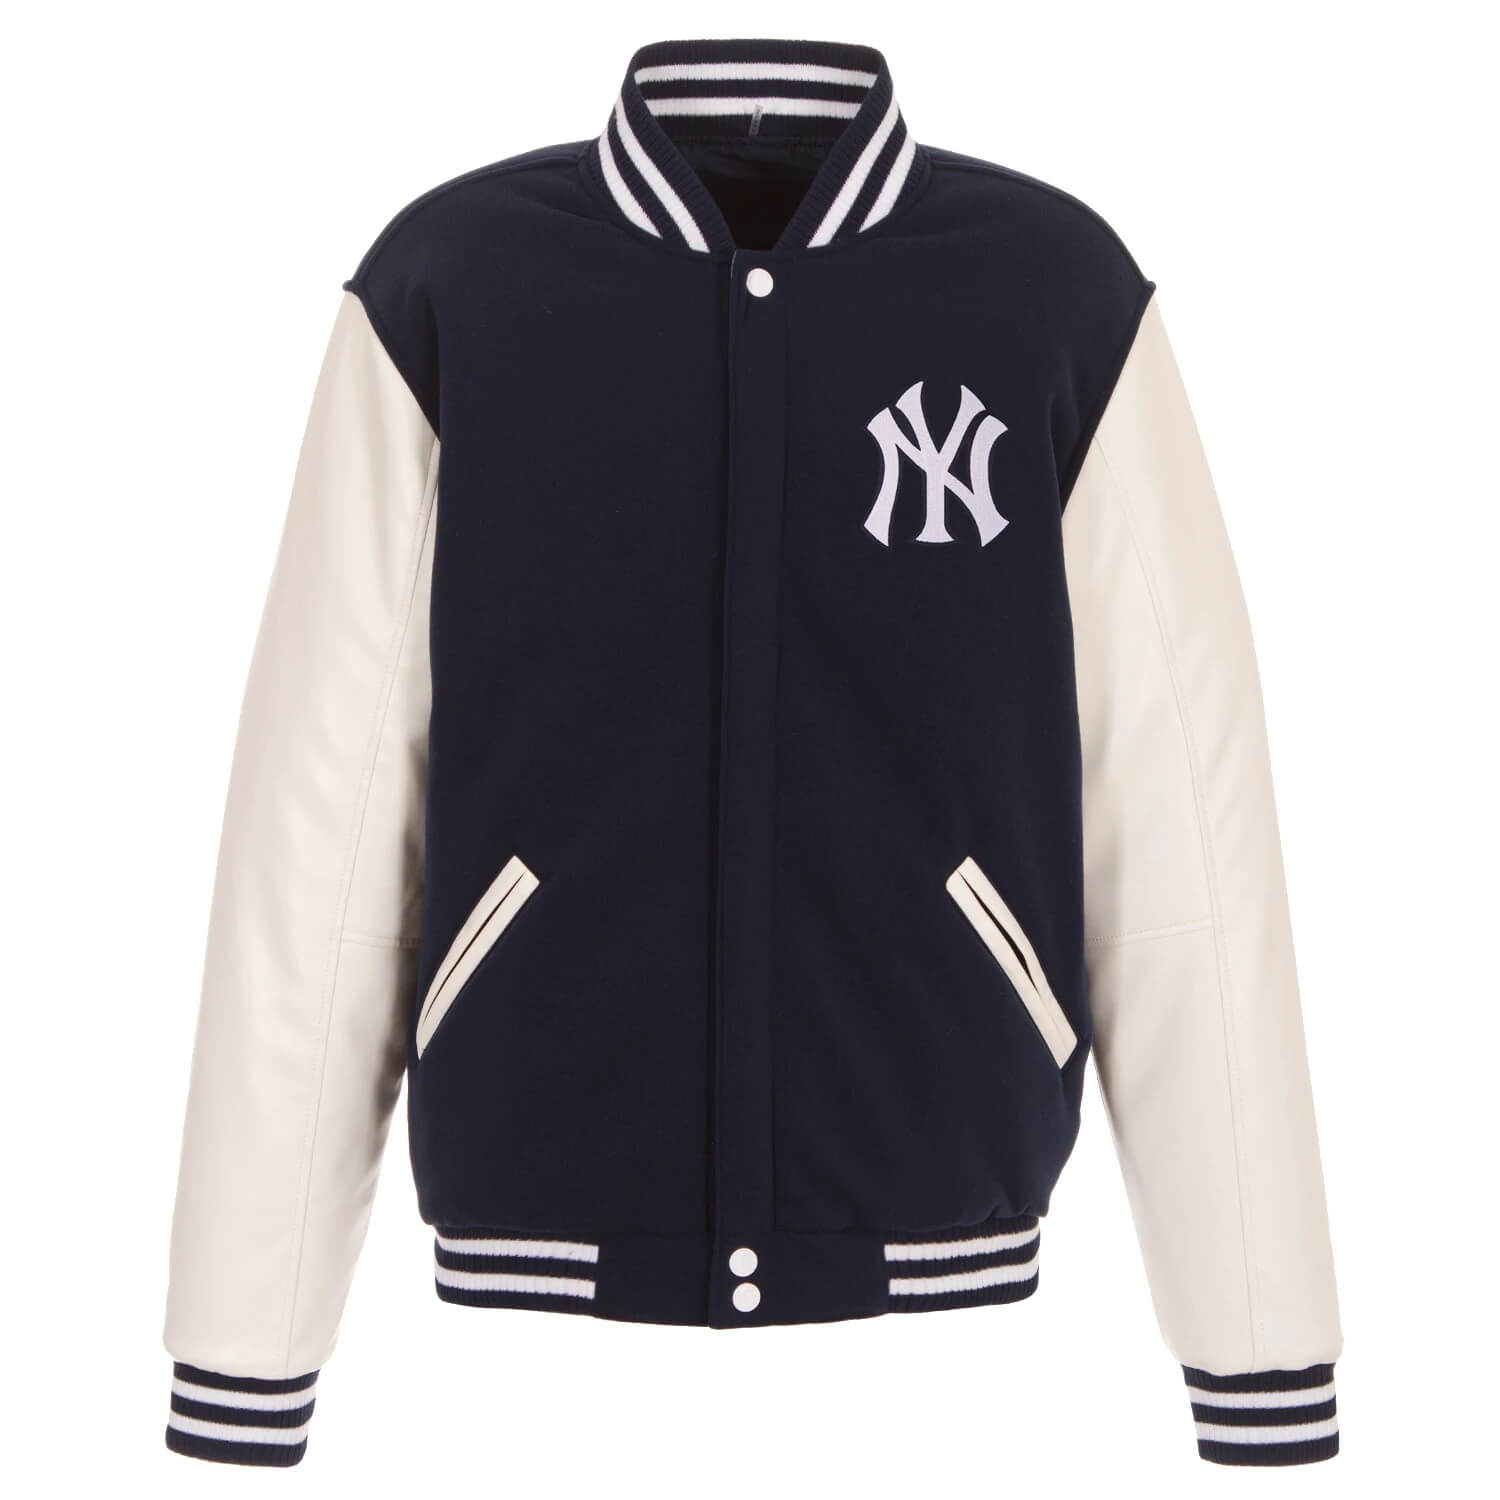 Maker of Jacket Fashion Jackets Navy White New York Yankees Varsity Letterman